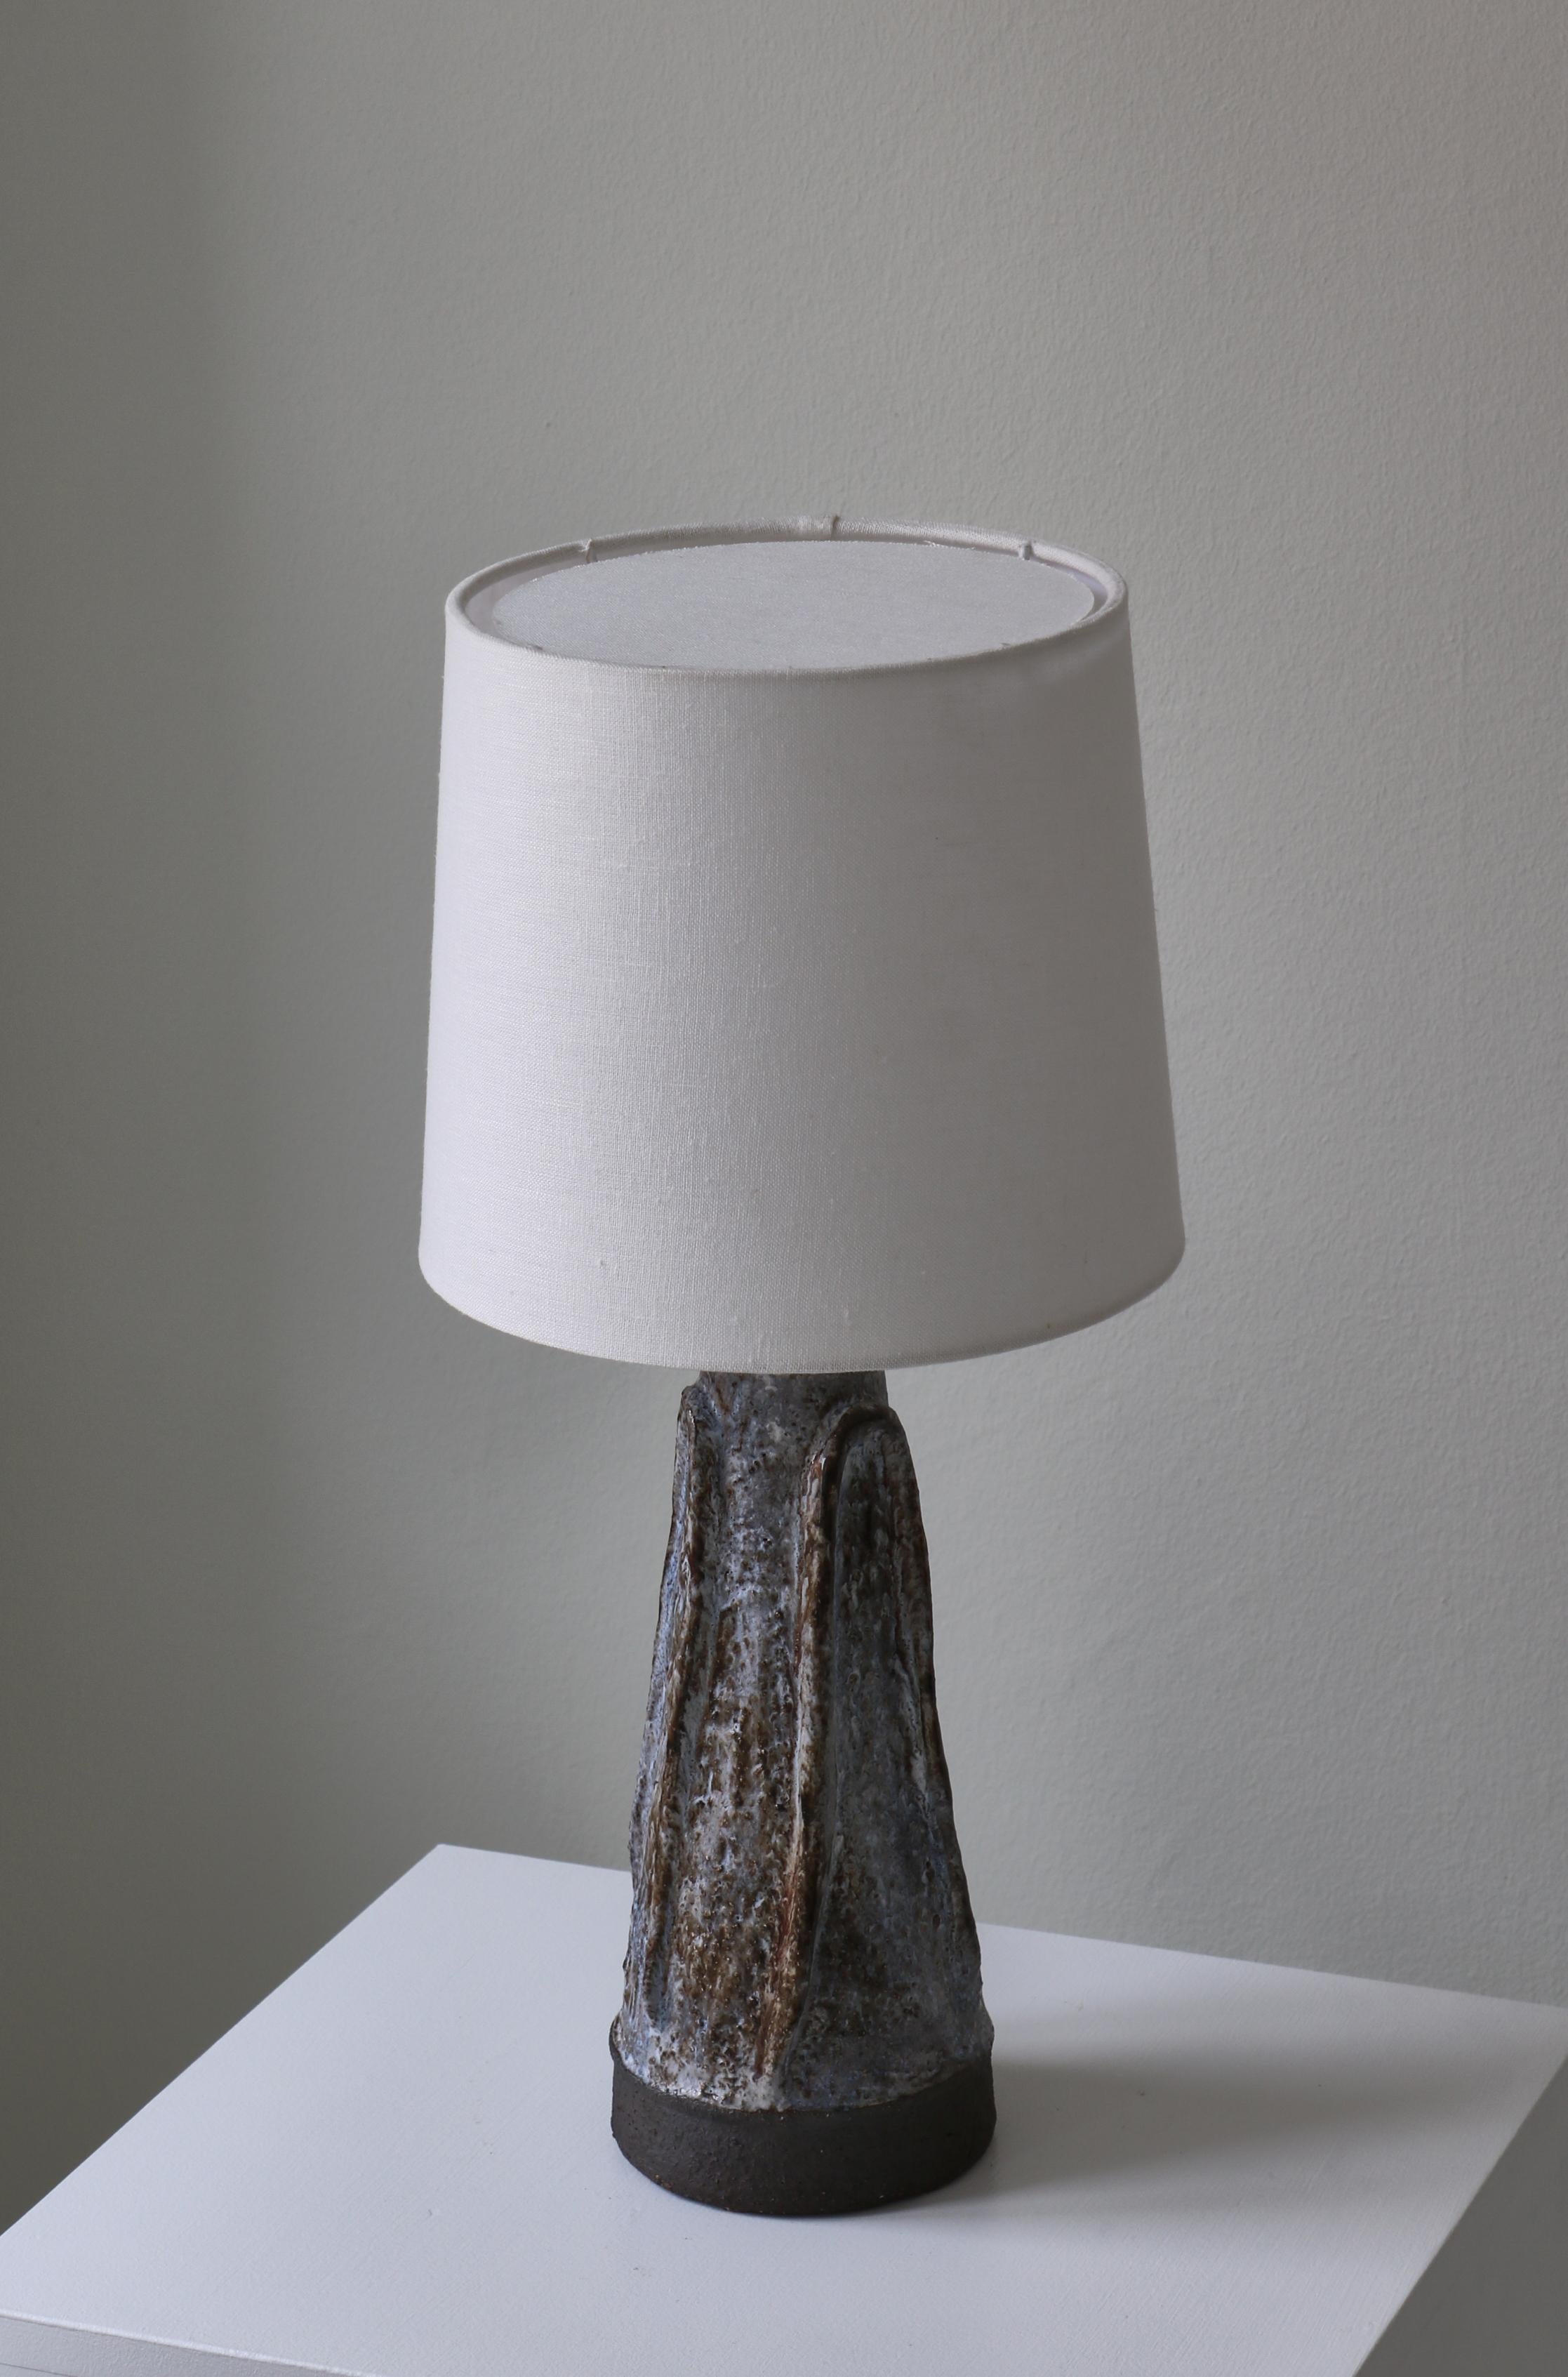 Mid-20th Century Scandinavian Modern Stoneware Table Lamp by Henri Ceramics, Denmark, 1960s For Sale